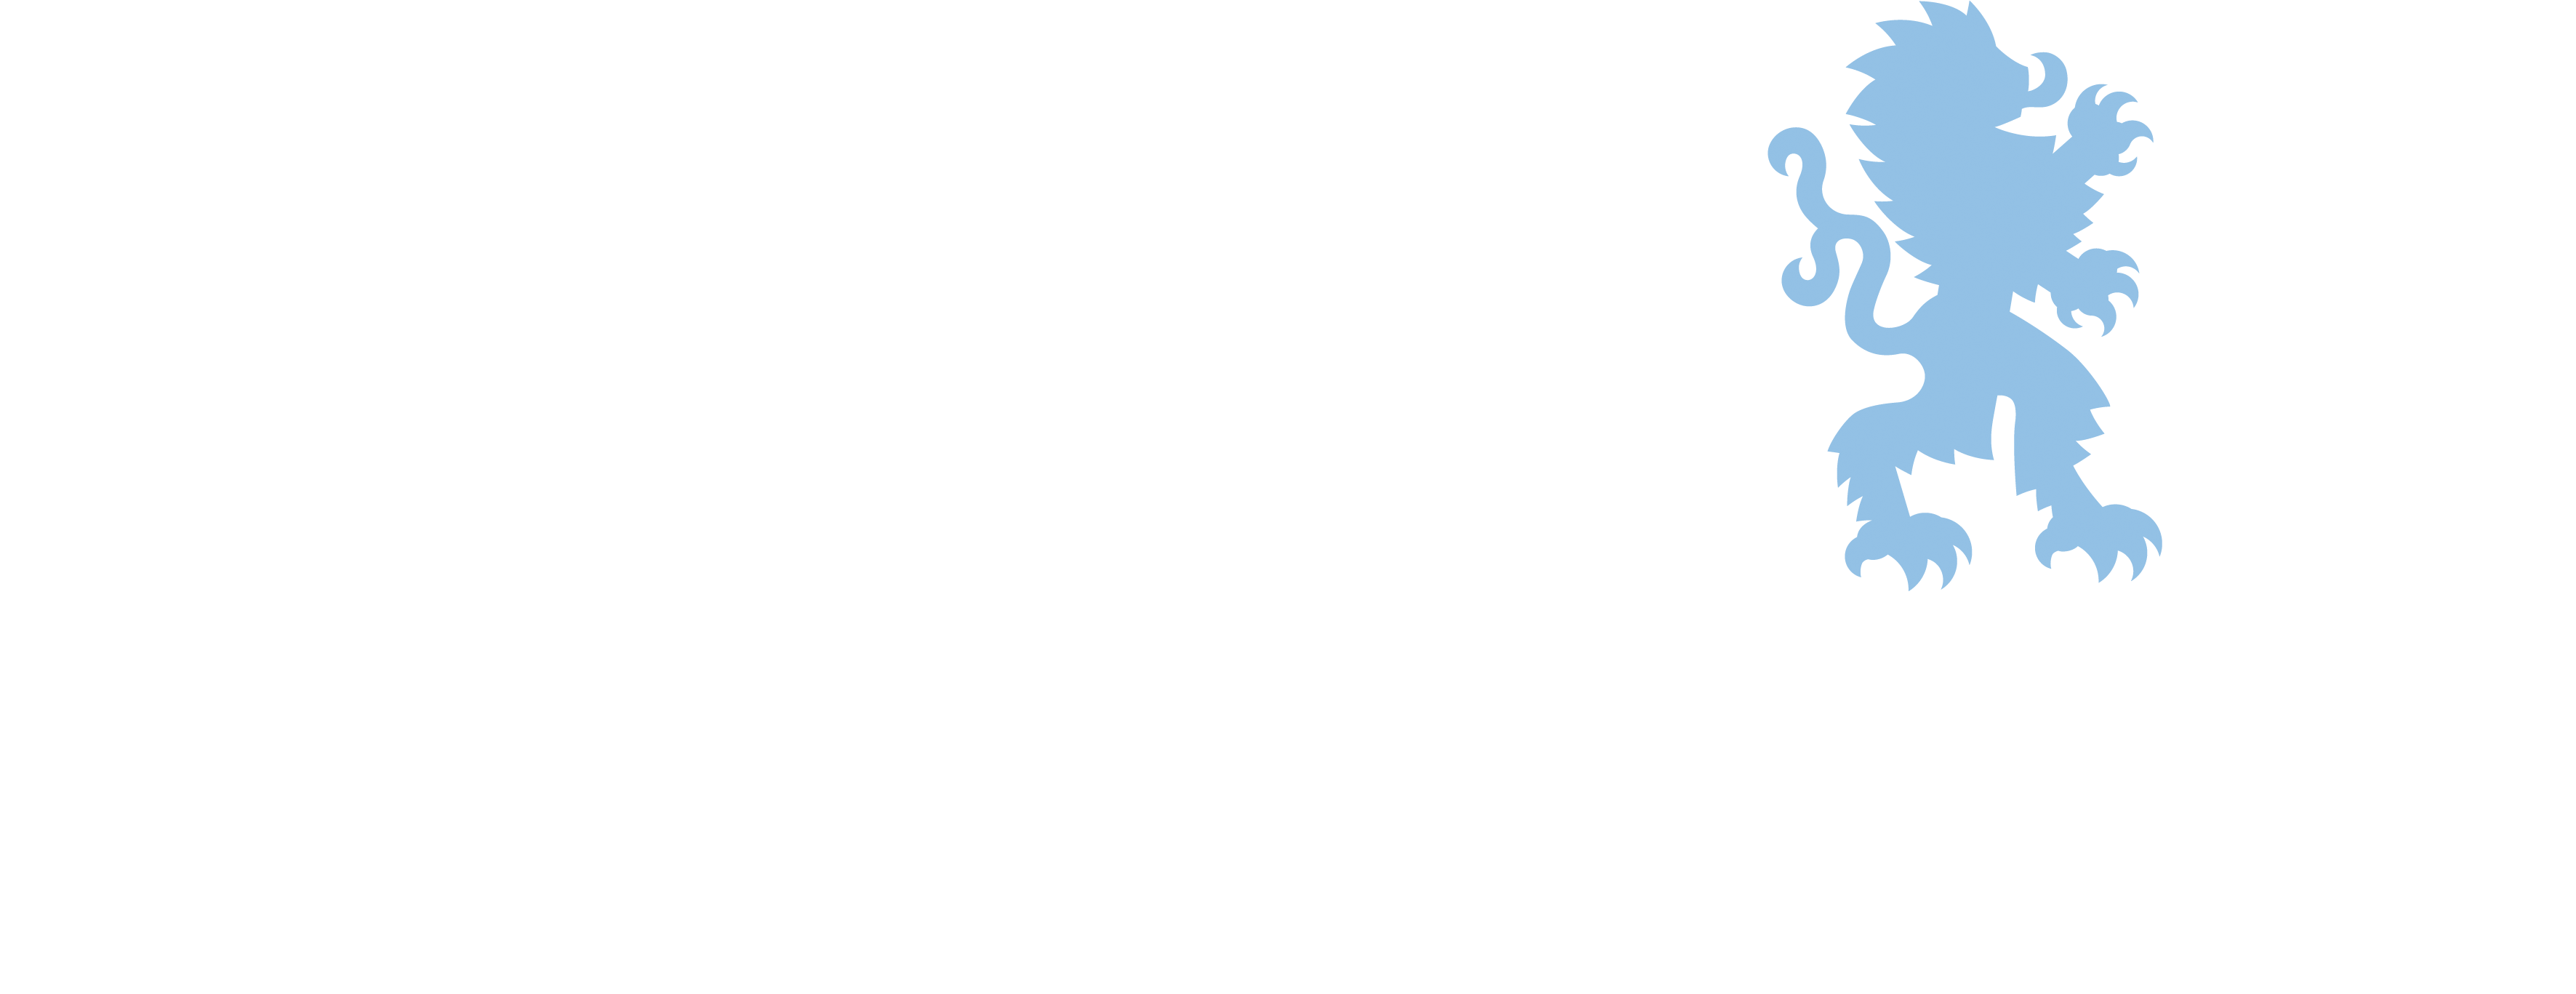 CSU Albachtal